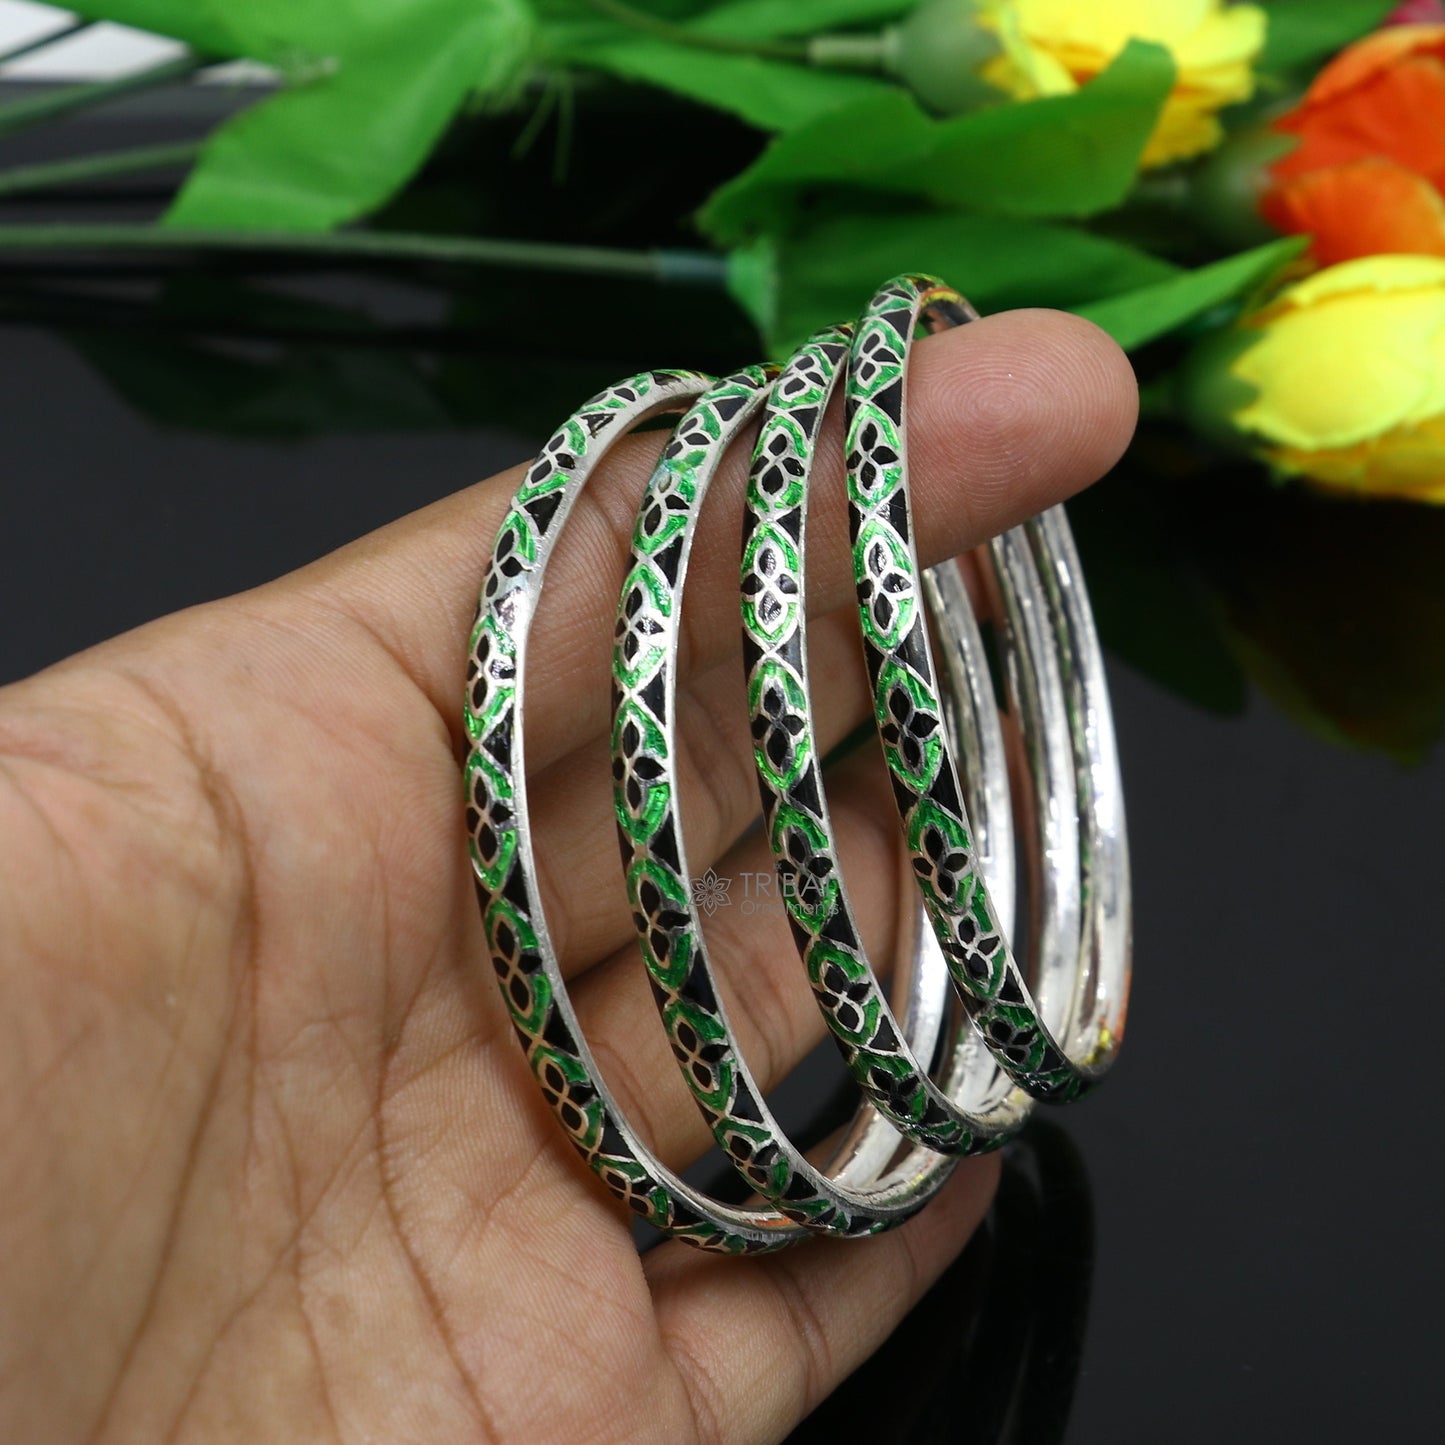 925 Sterling silver handmade amazing meenakari (multi color enamel )bangle bracelet floral design Cultural trendy style jewelry nba368 - TRIBAL ORNAMENTS